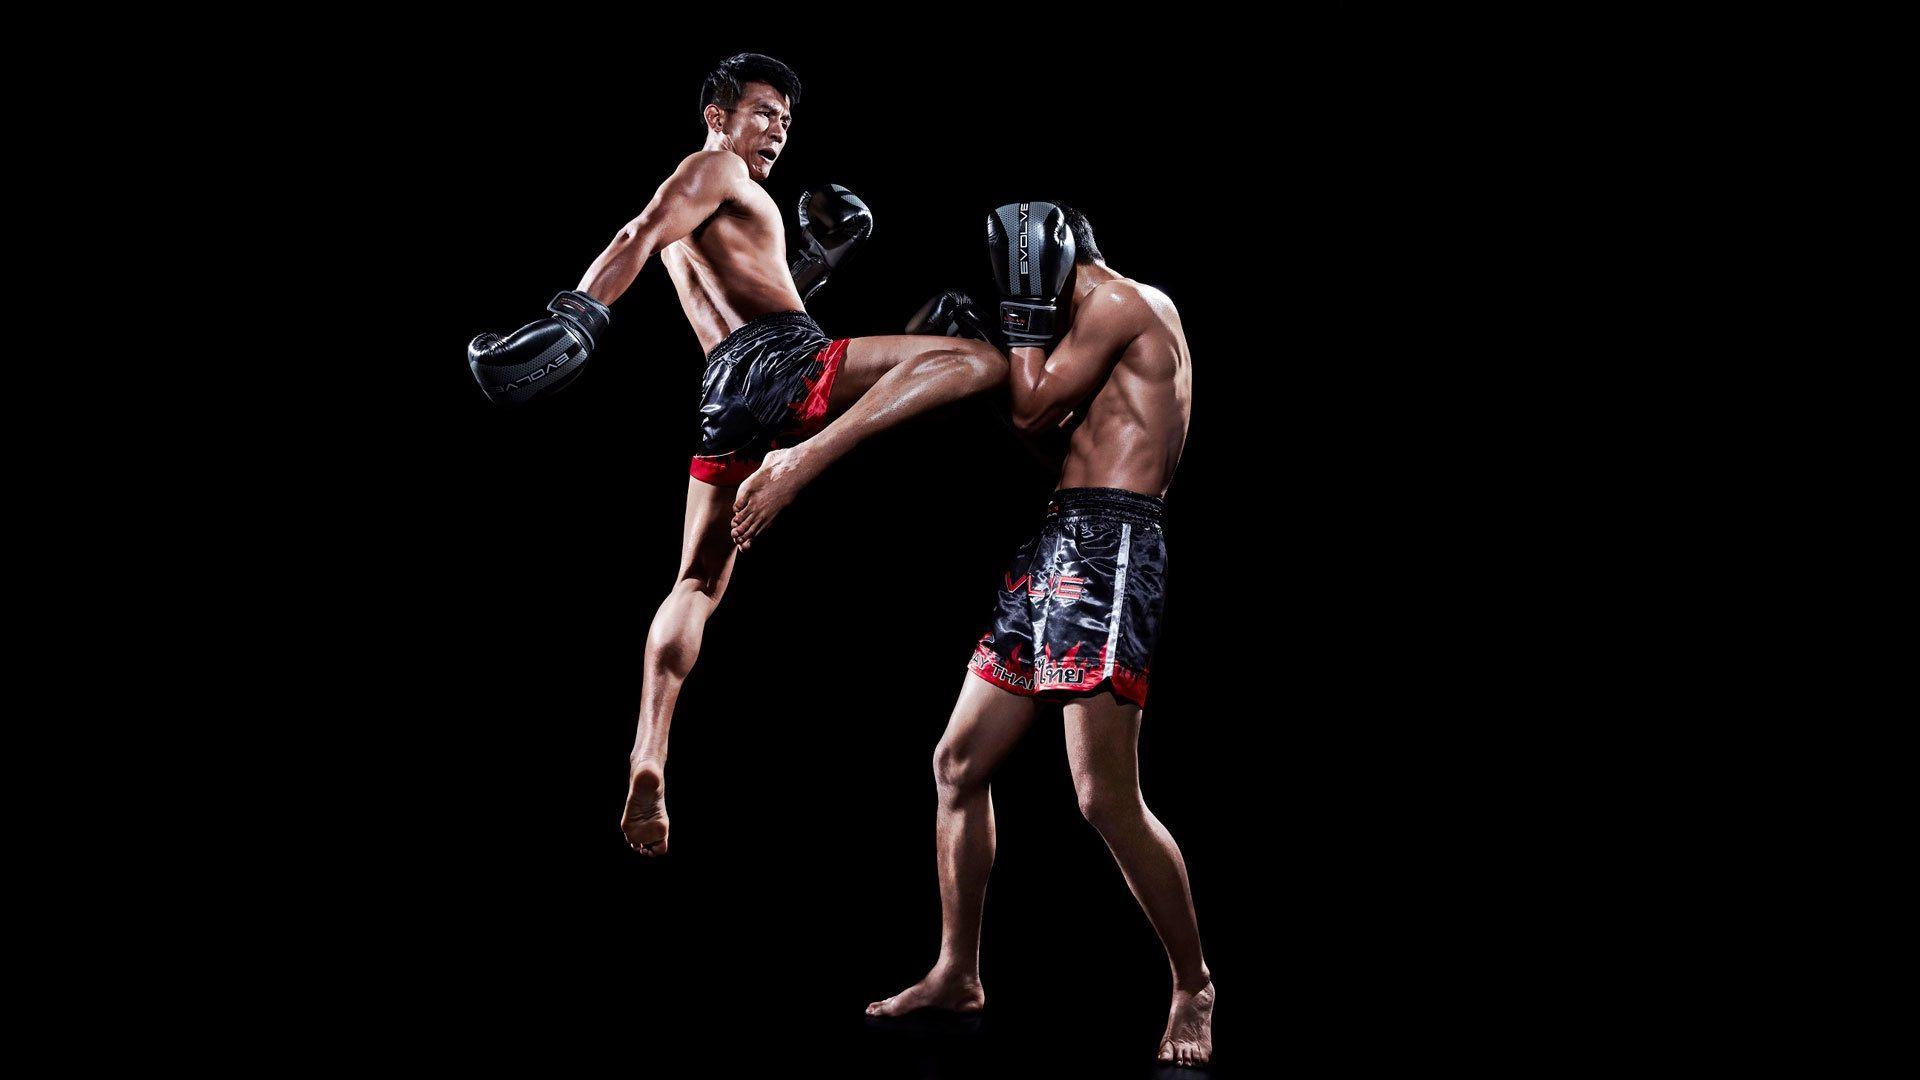 Download Wallpaper 1920x1080 Muay thai, fight, sports, black